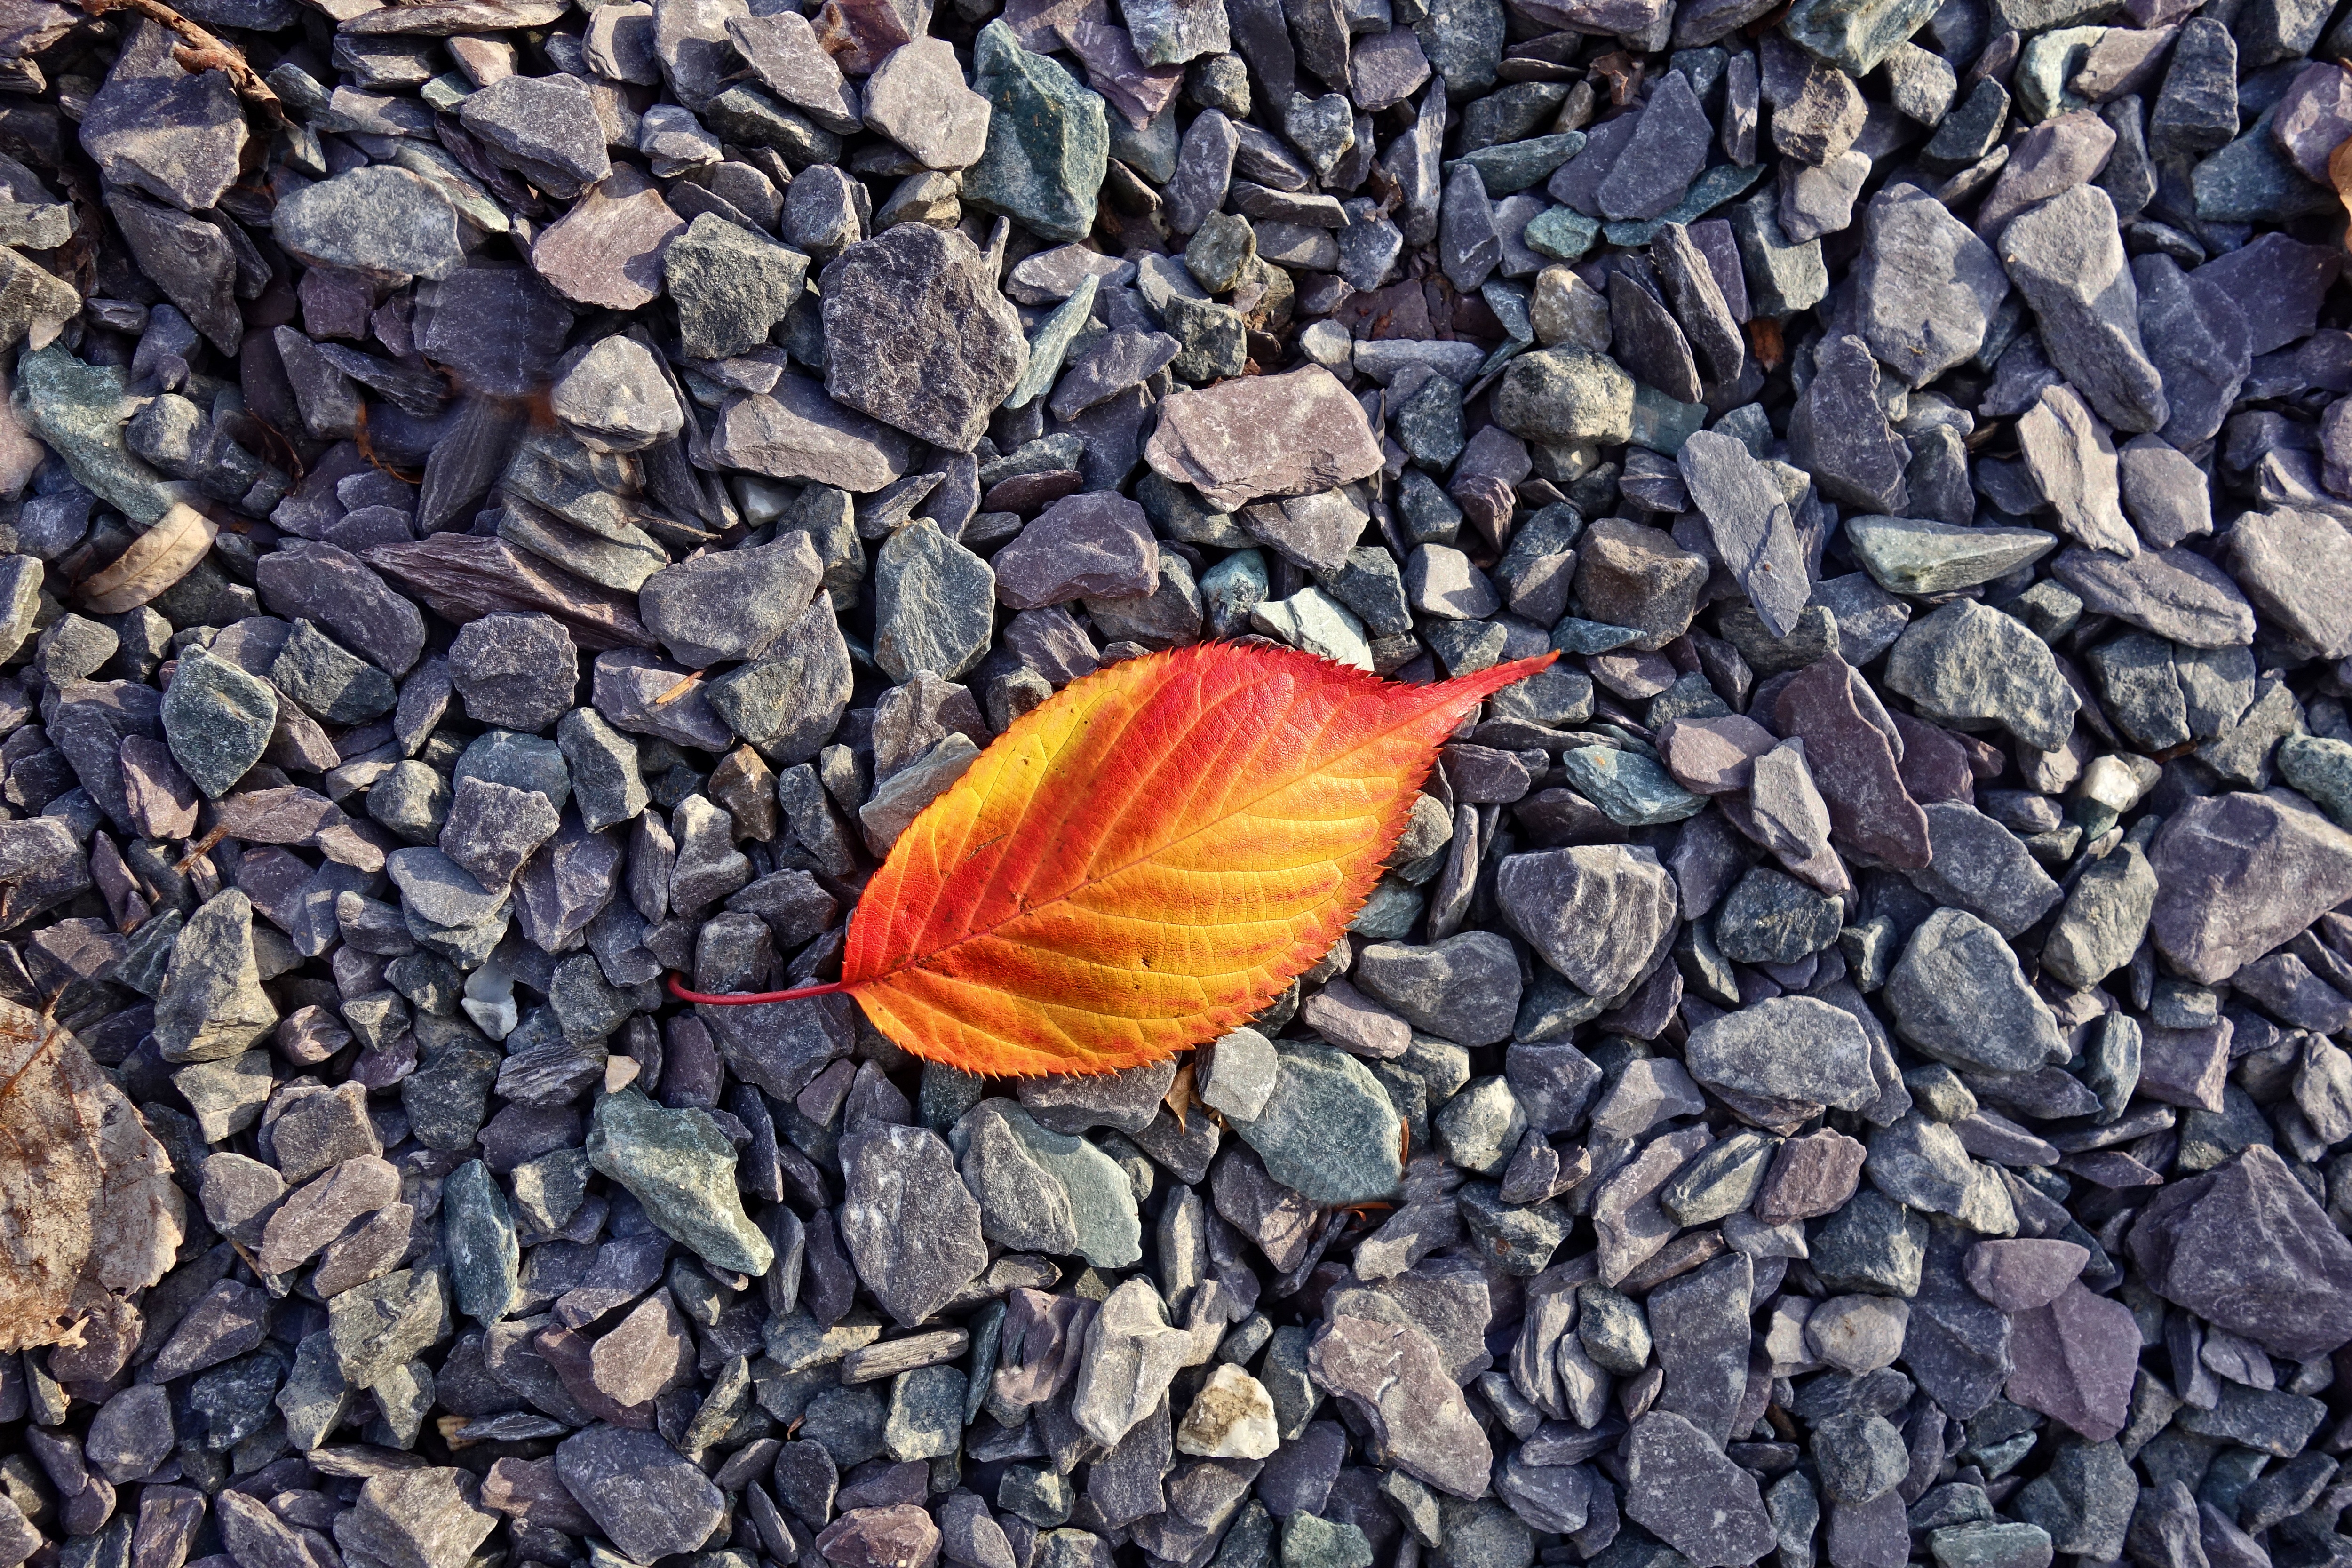 Leaf stone. Листья на камнях. Осенние камни. Осенние листья на камнях. Каменный лист.